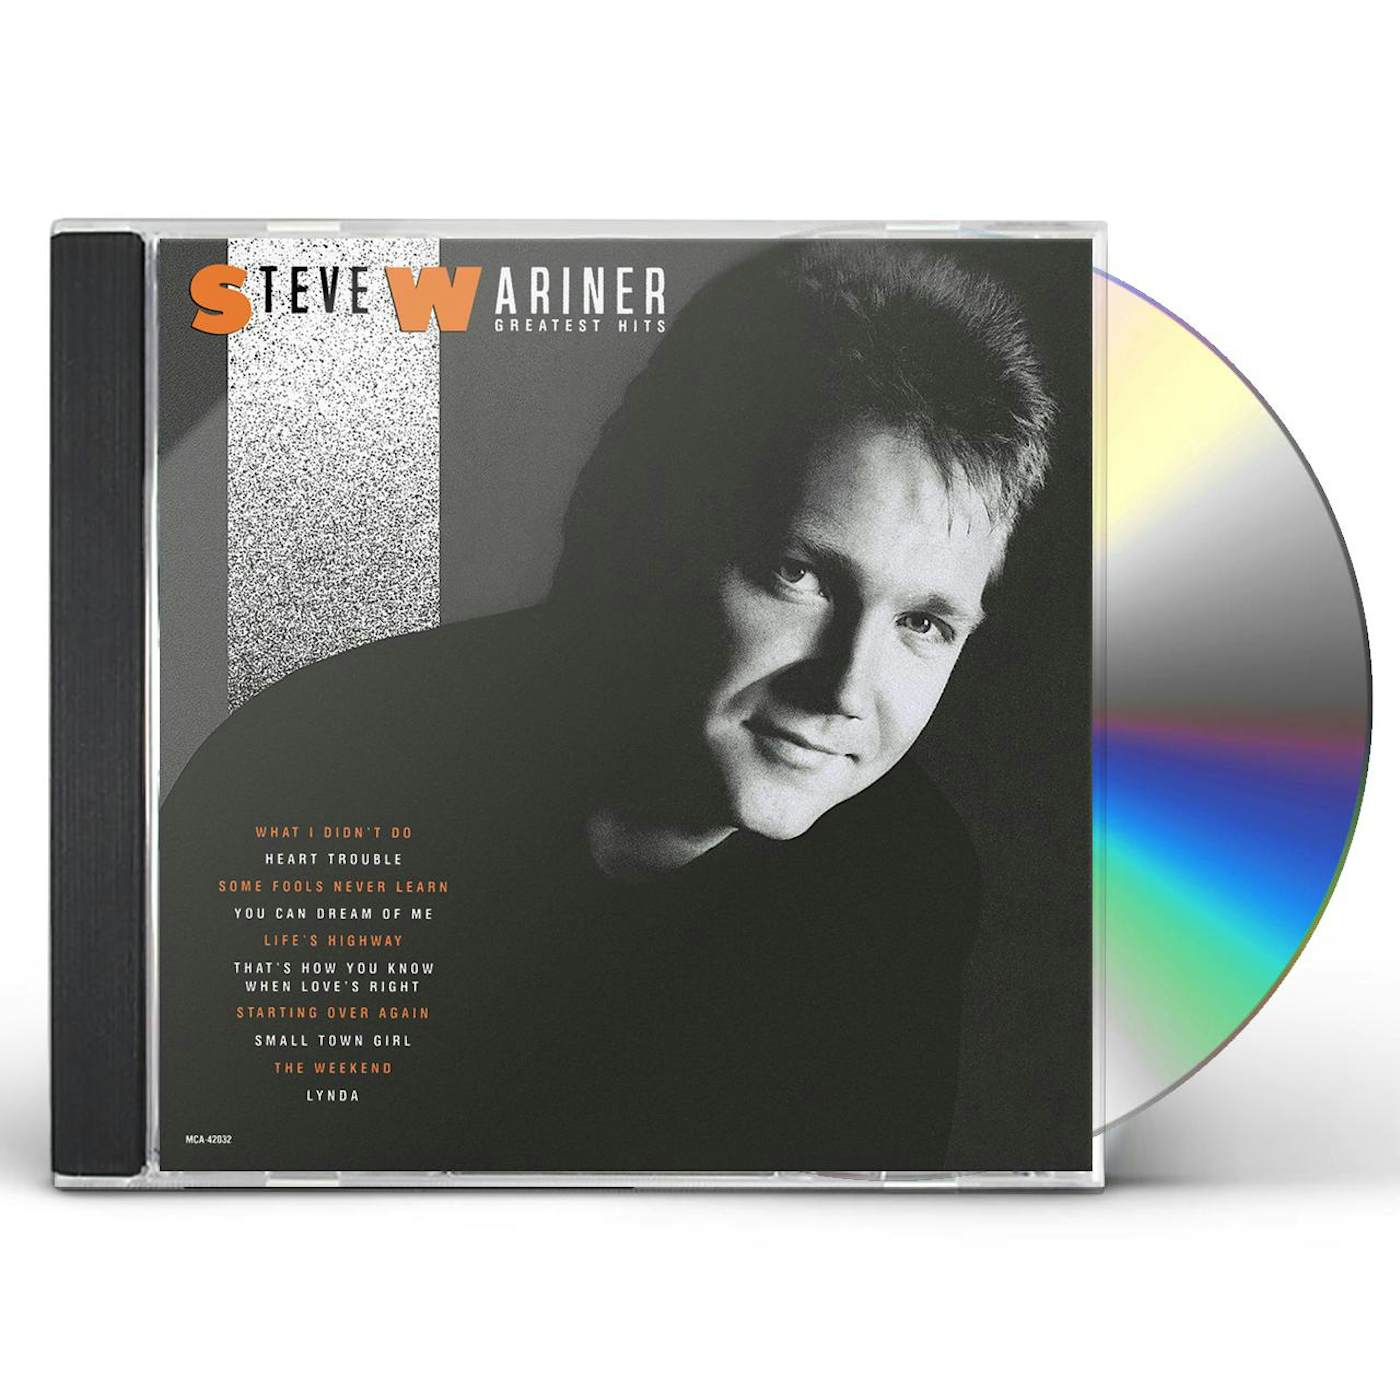 Steve Wariner GREATEST HITS CD